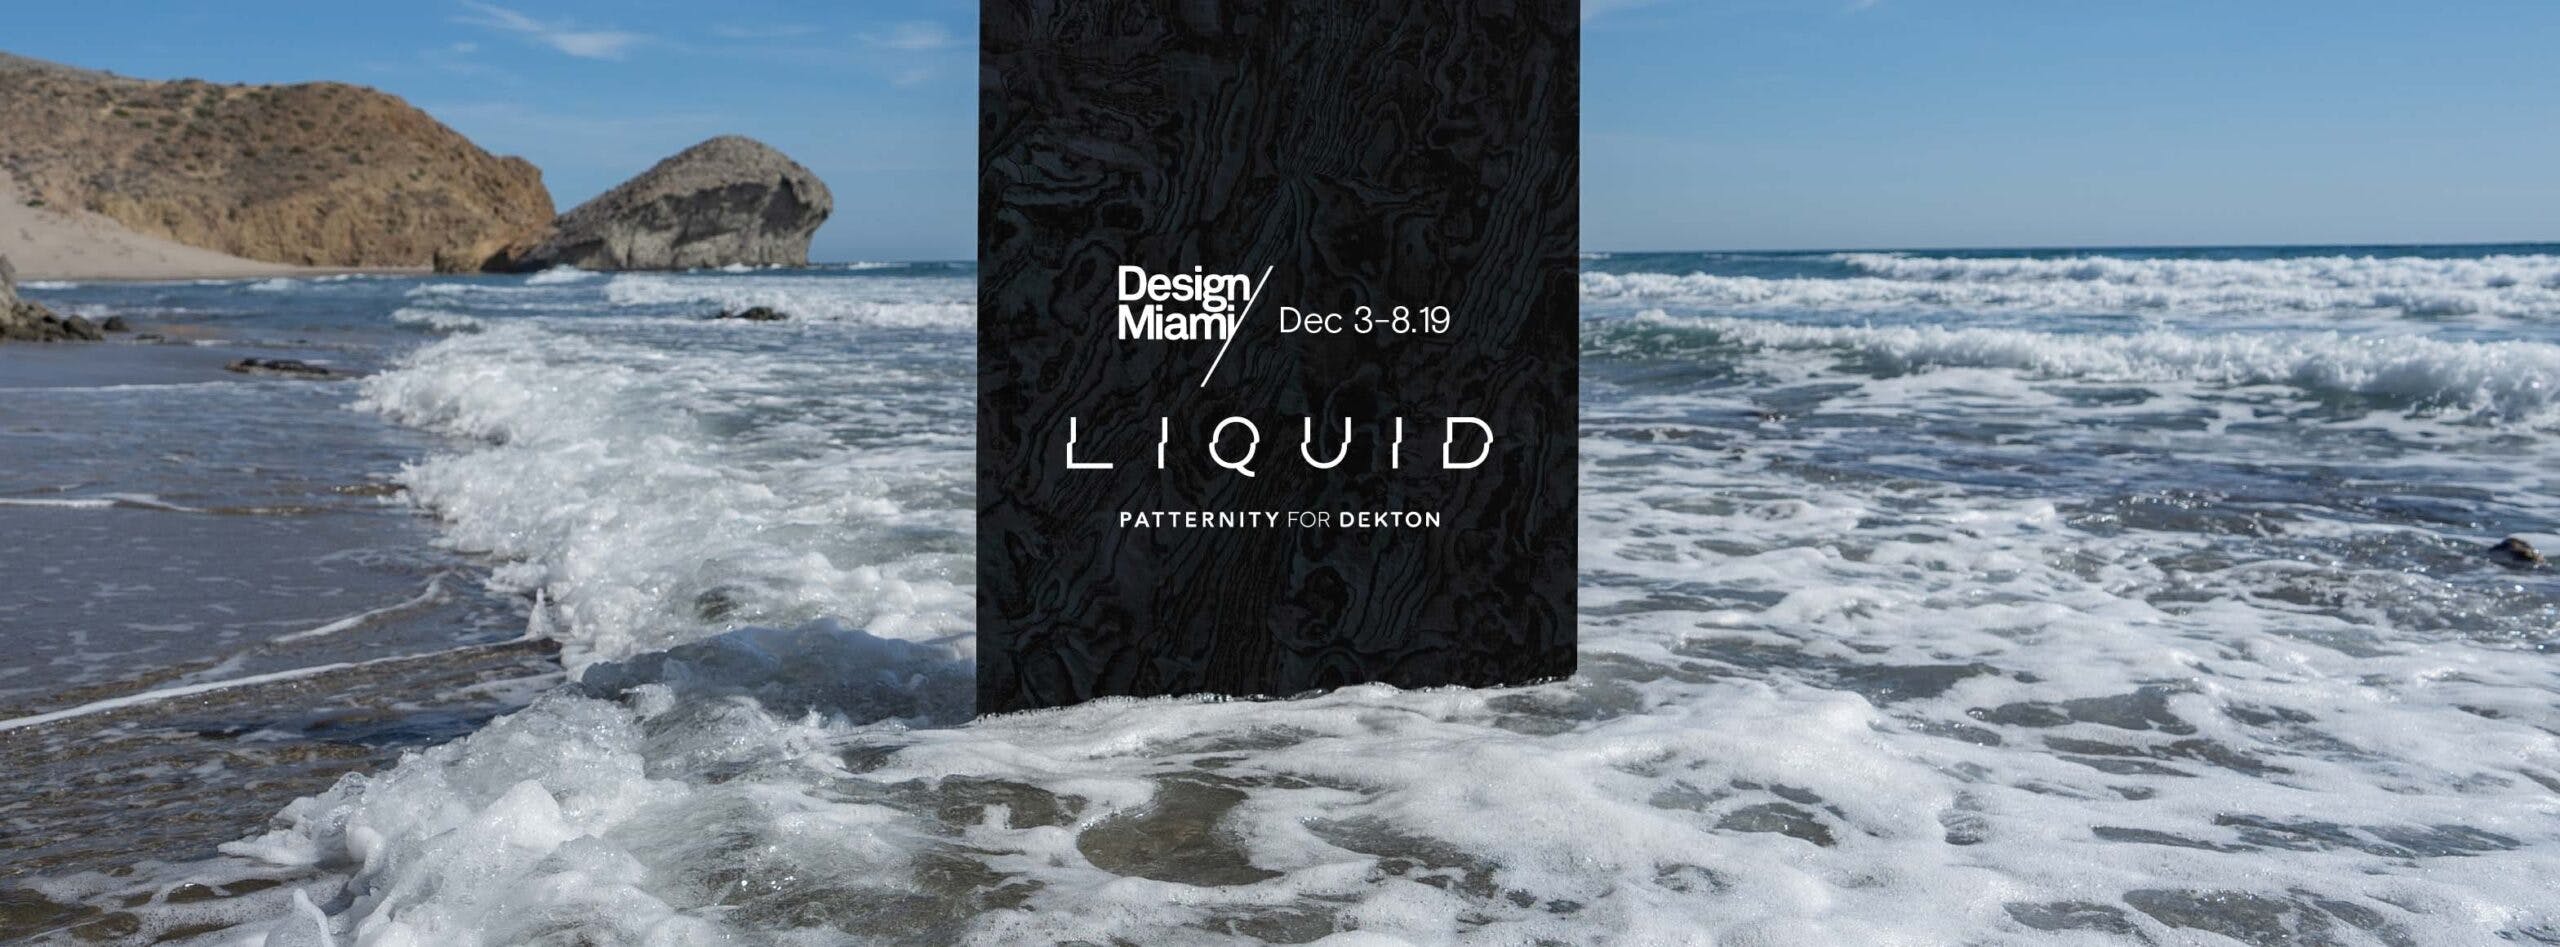 Image 35 of Liquid Miami 1 2 scaled in Cosentino returns to Miami Design Week 2019 - Cosentino